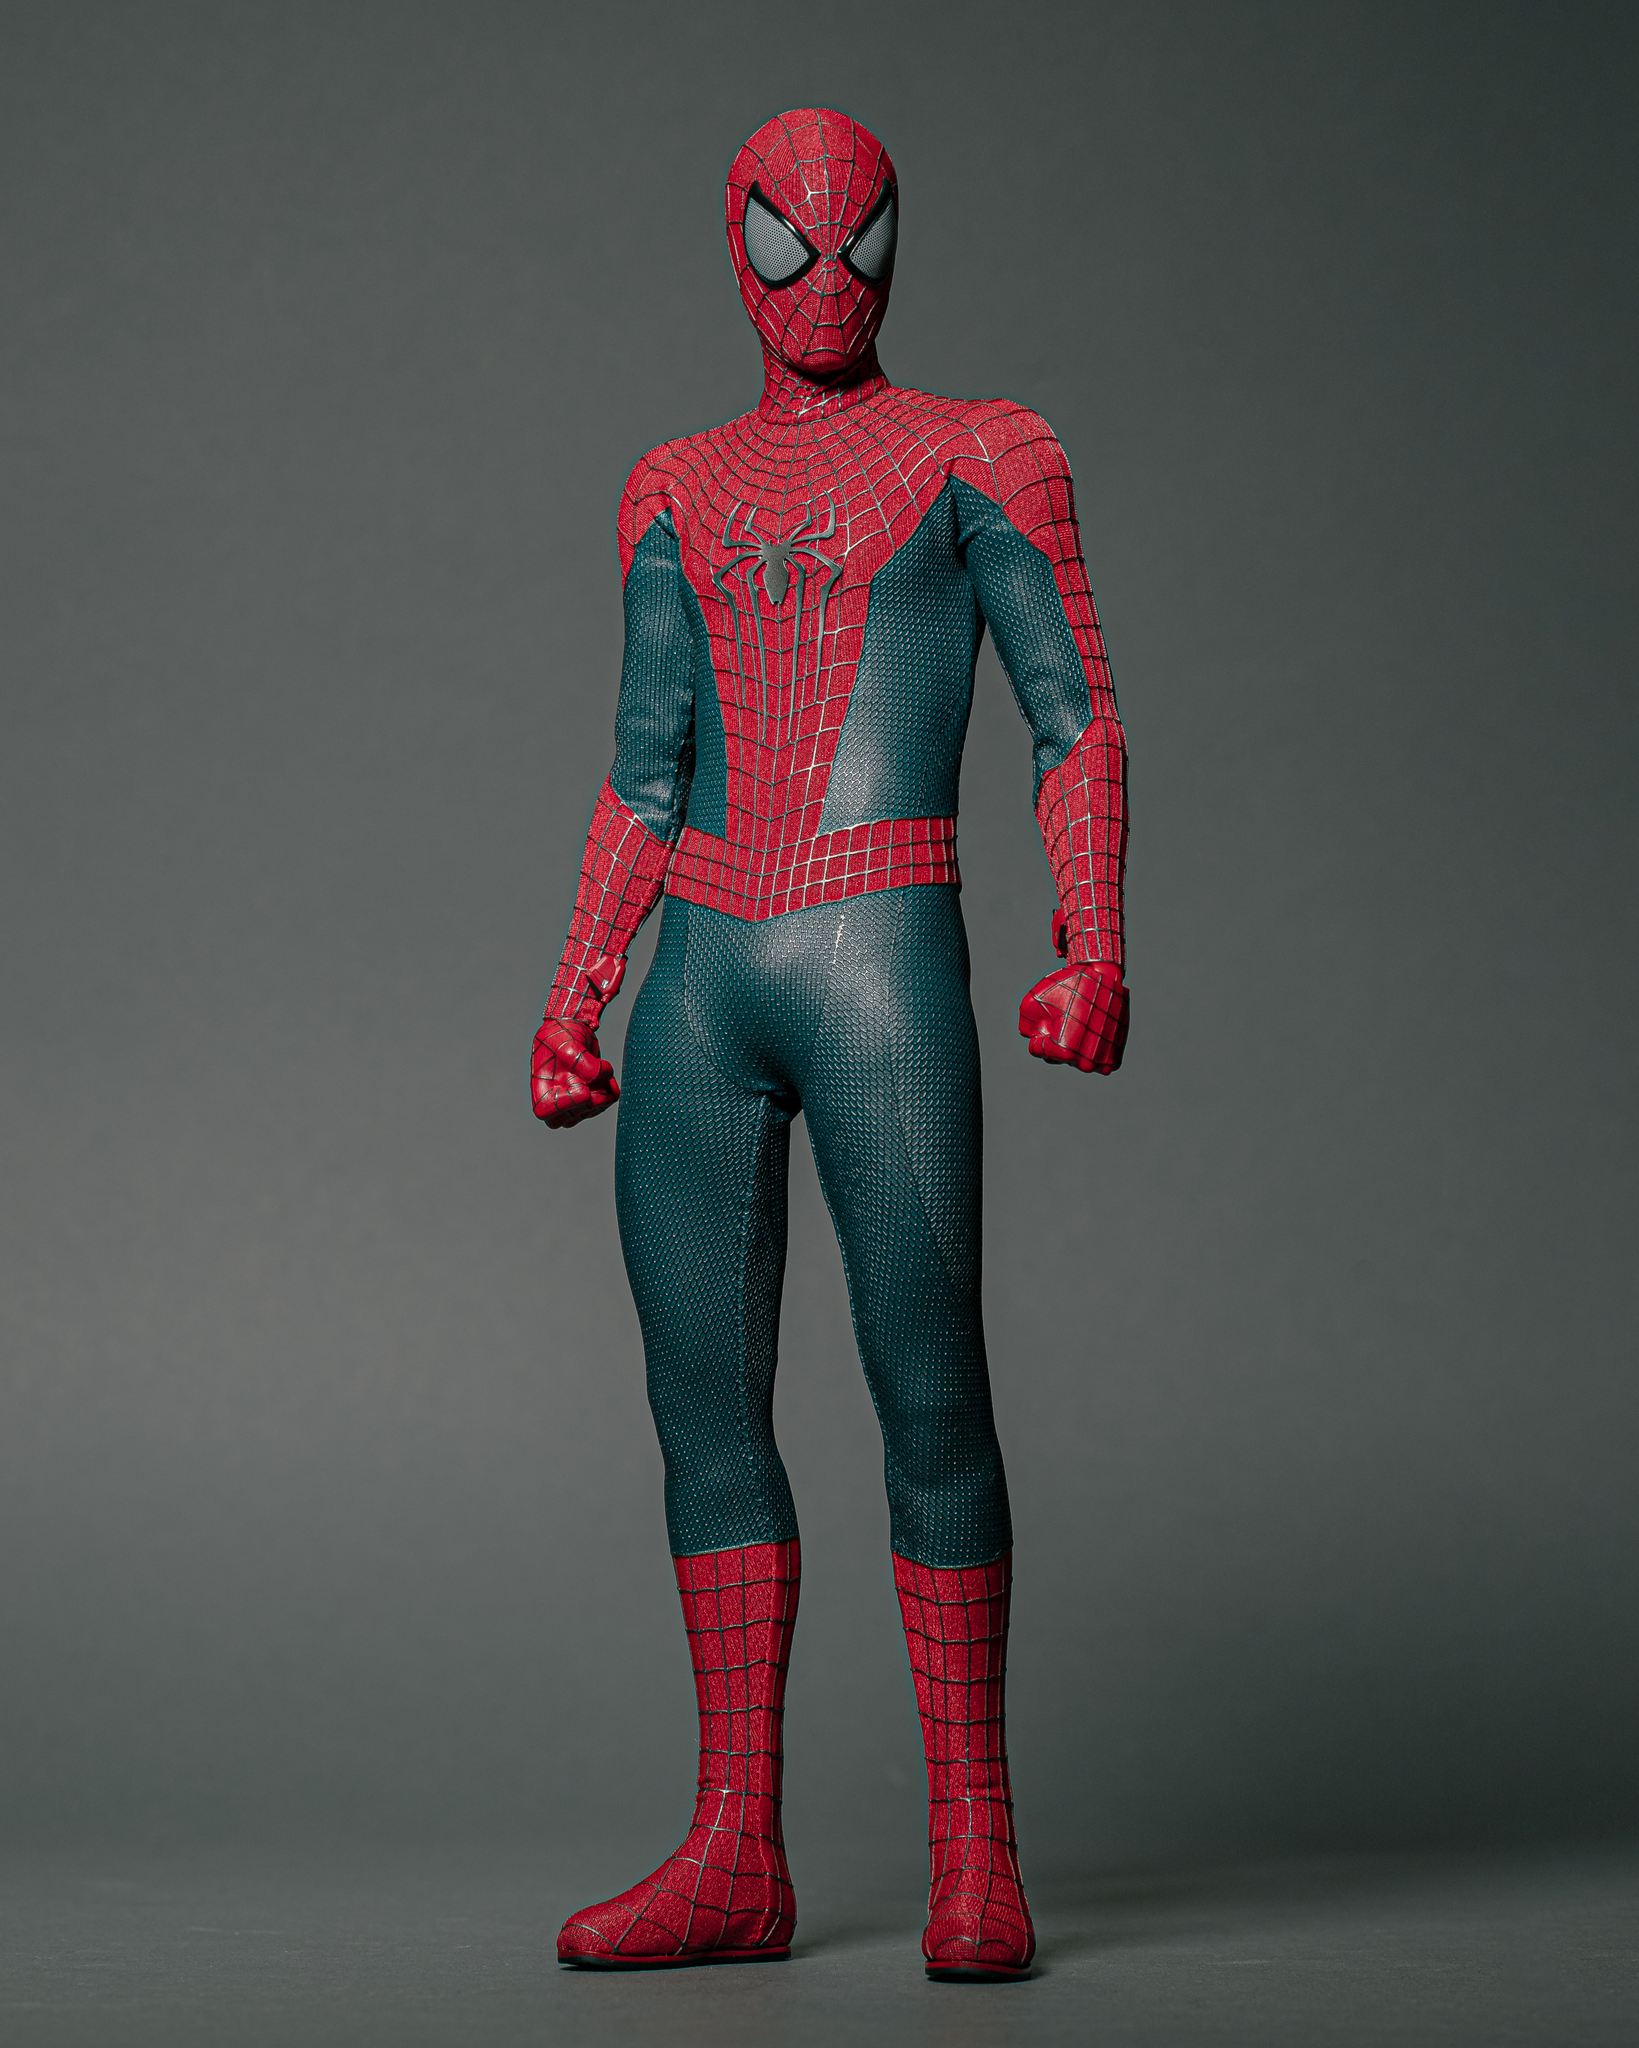 the amazing spider man 2 fan art